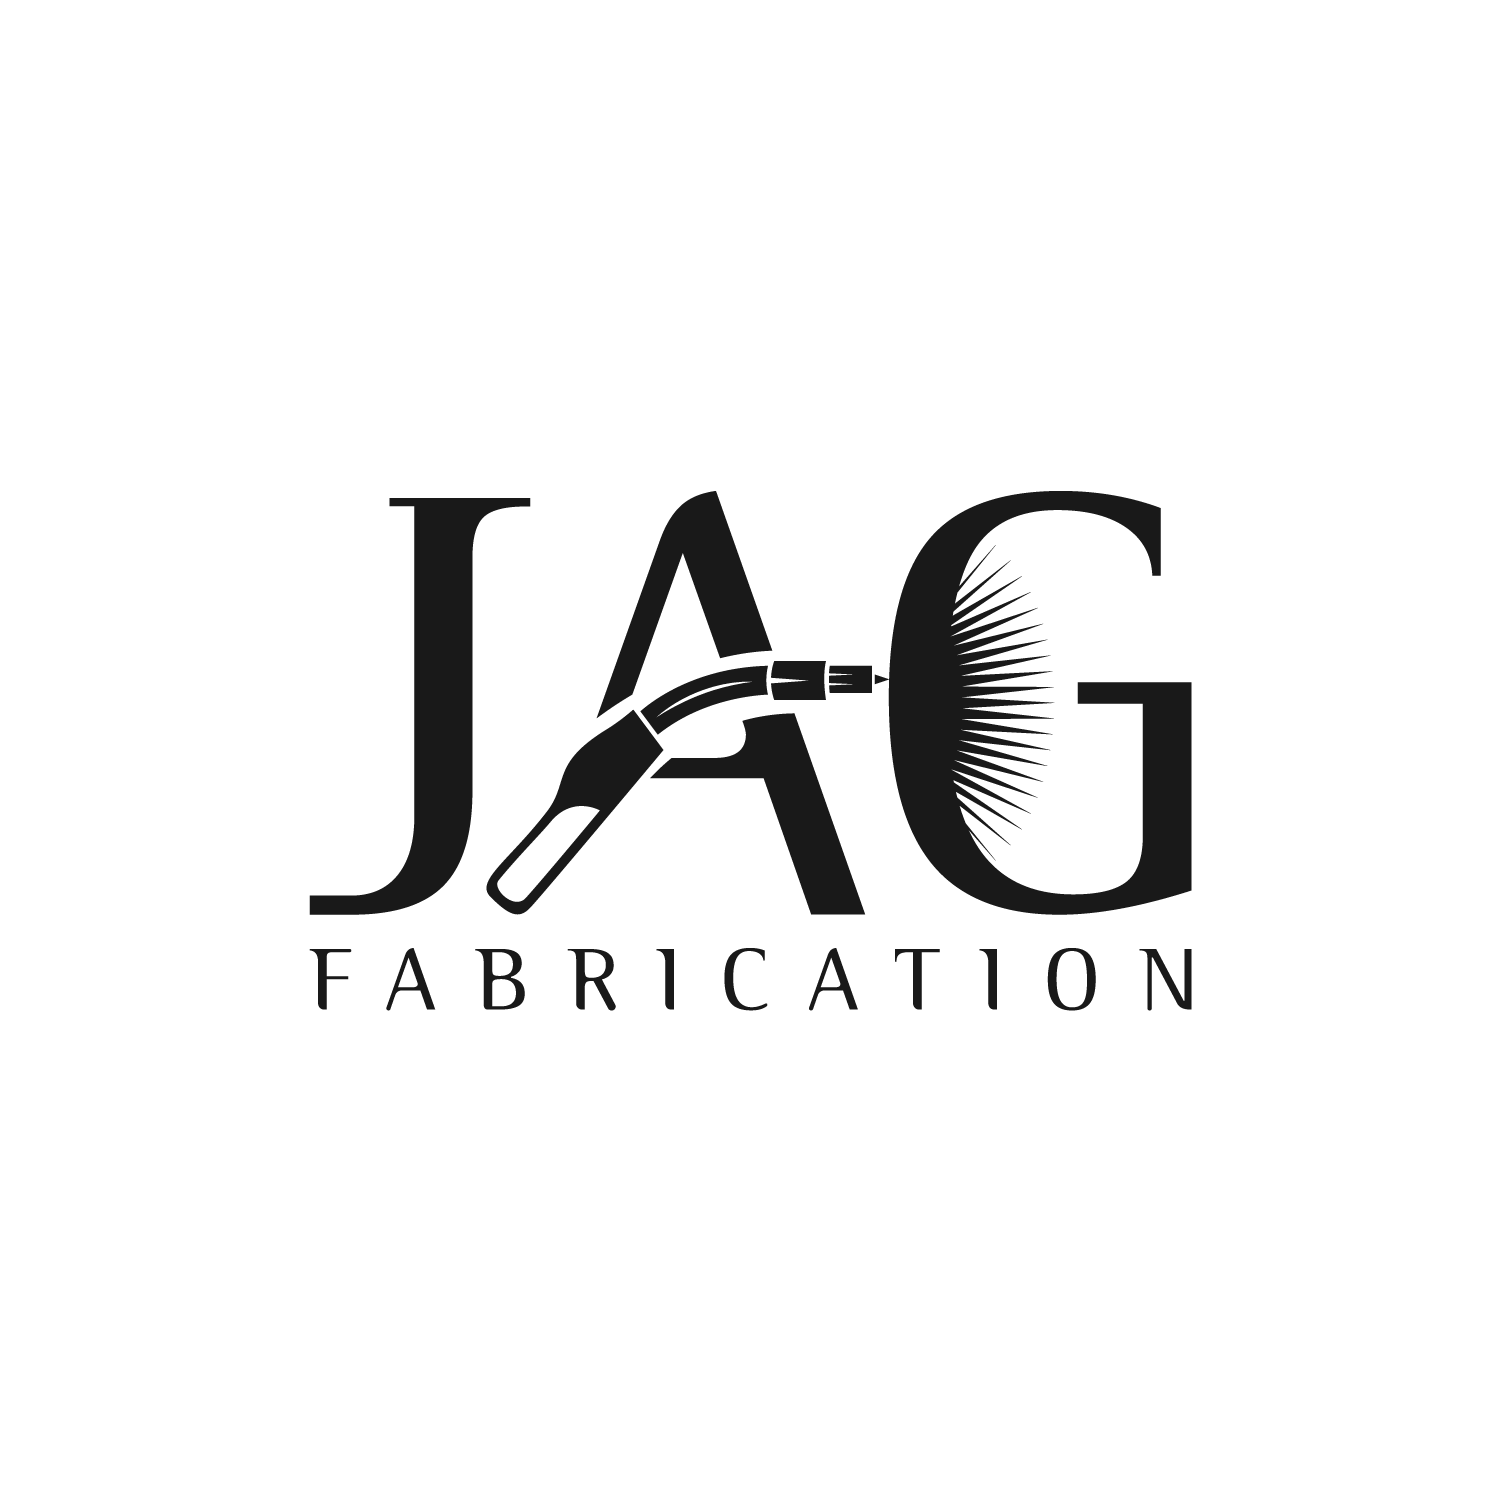 Fabrication Logo - Bold, Serious, Metal Fabrication Logo Design for JAG or JAG ...